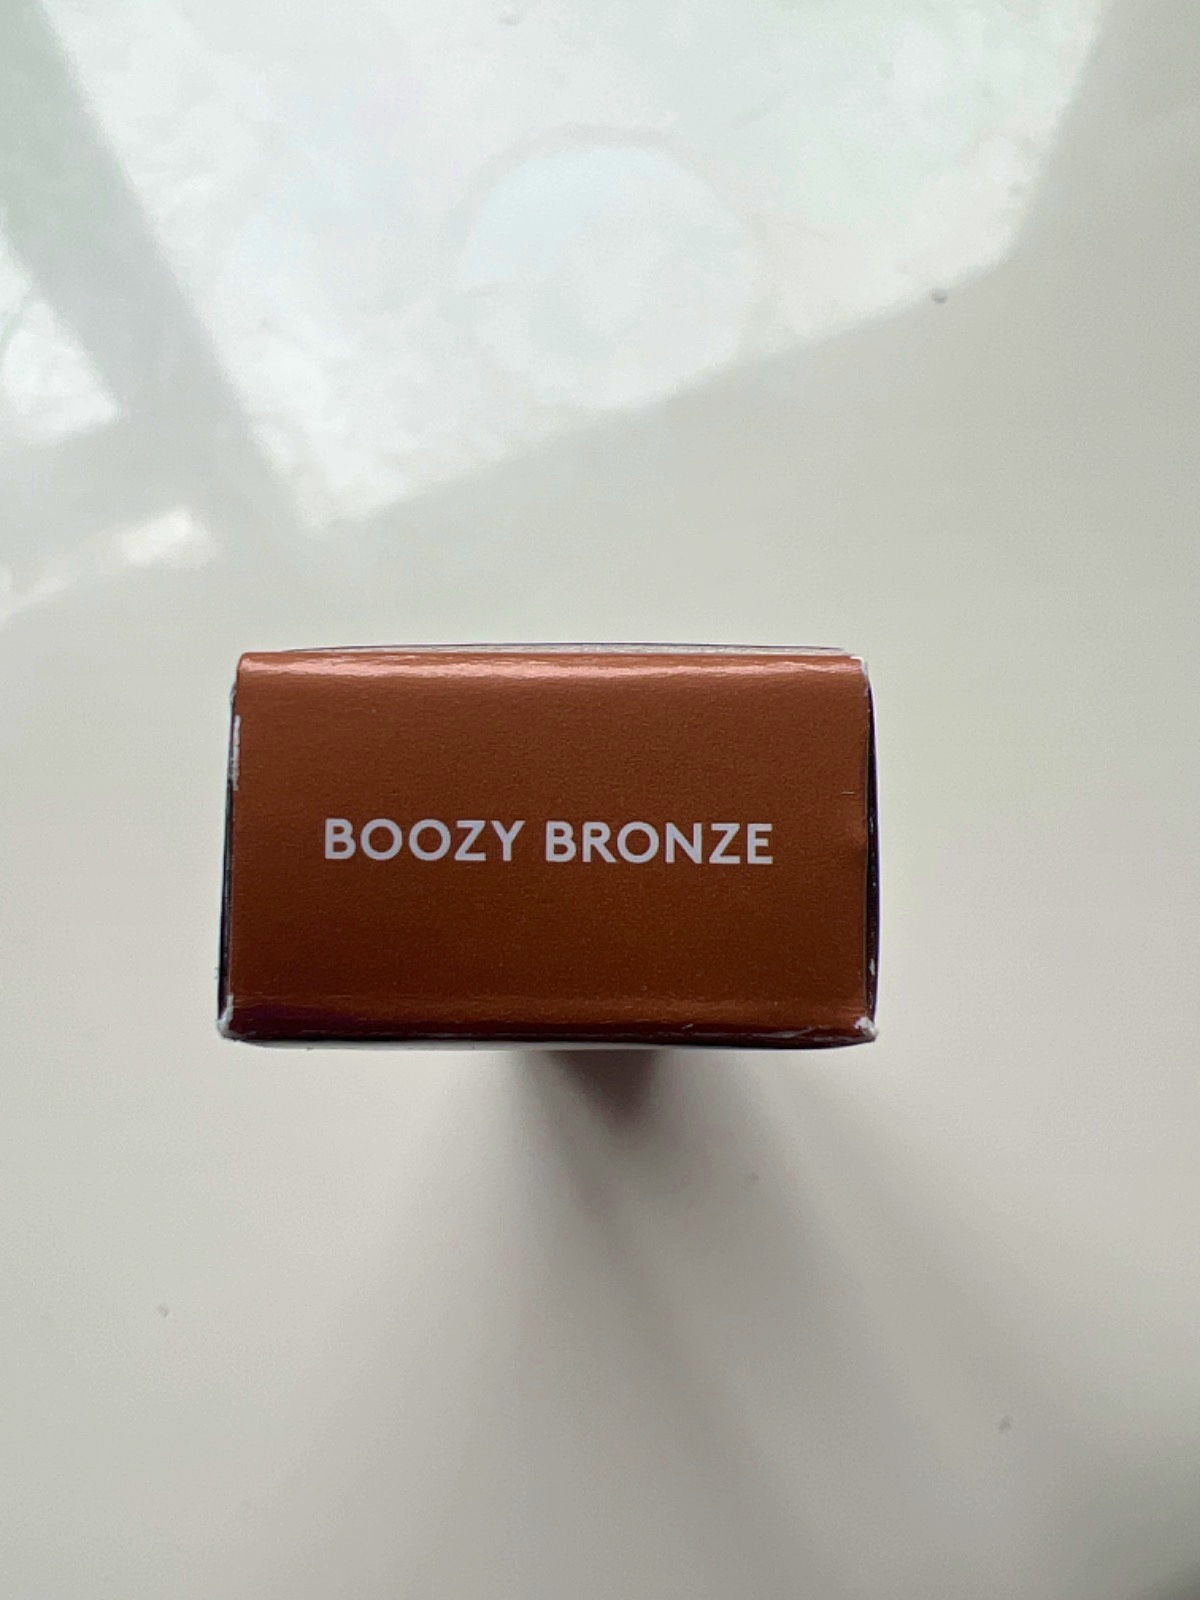 Fenty Beauty Glitty Lid Shimmer Liquid Eyeliner Boozy Bronze 3.3ml